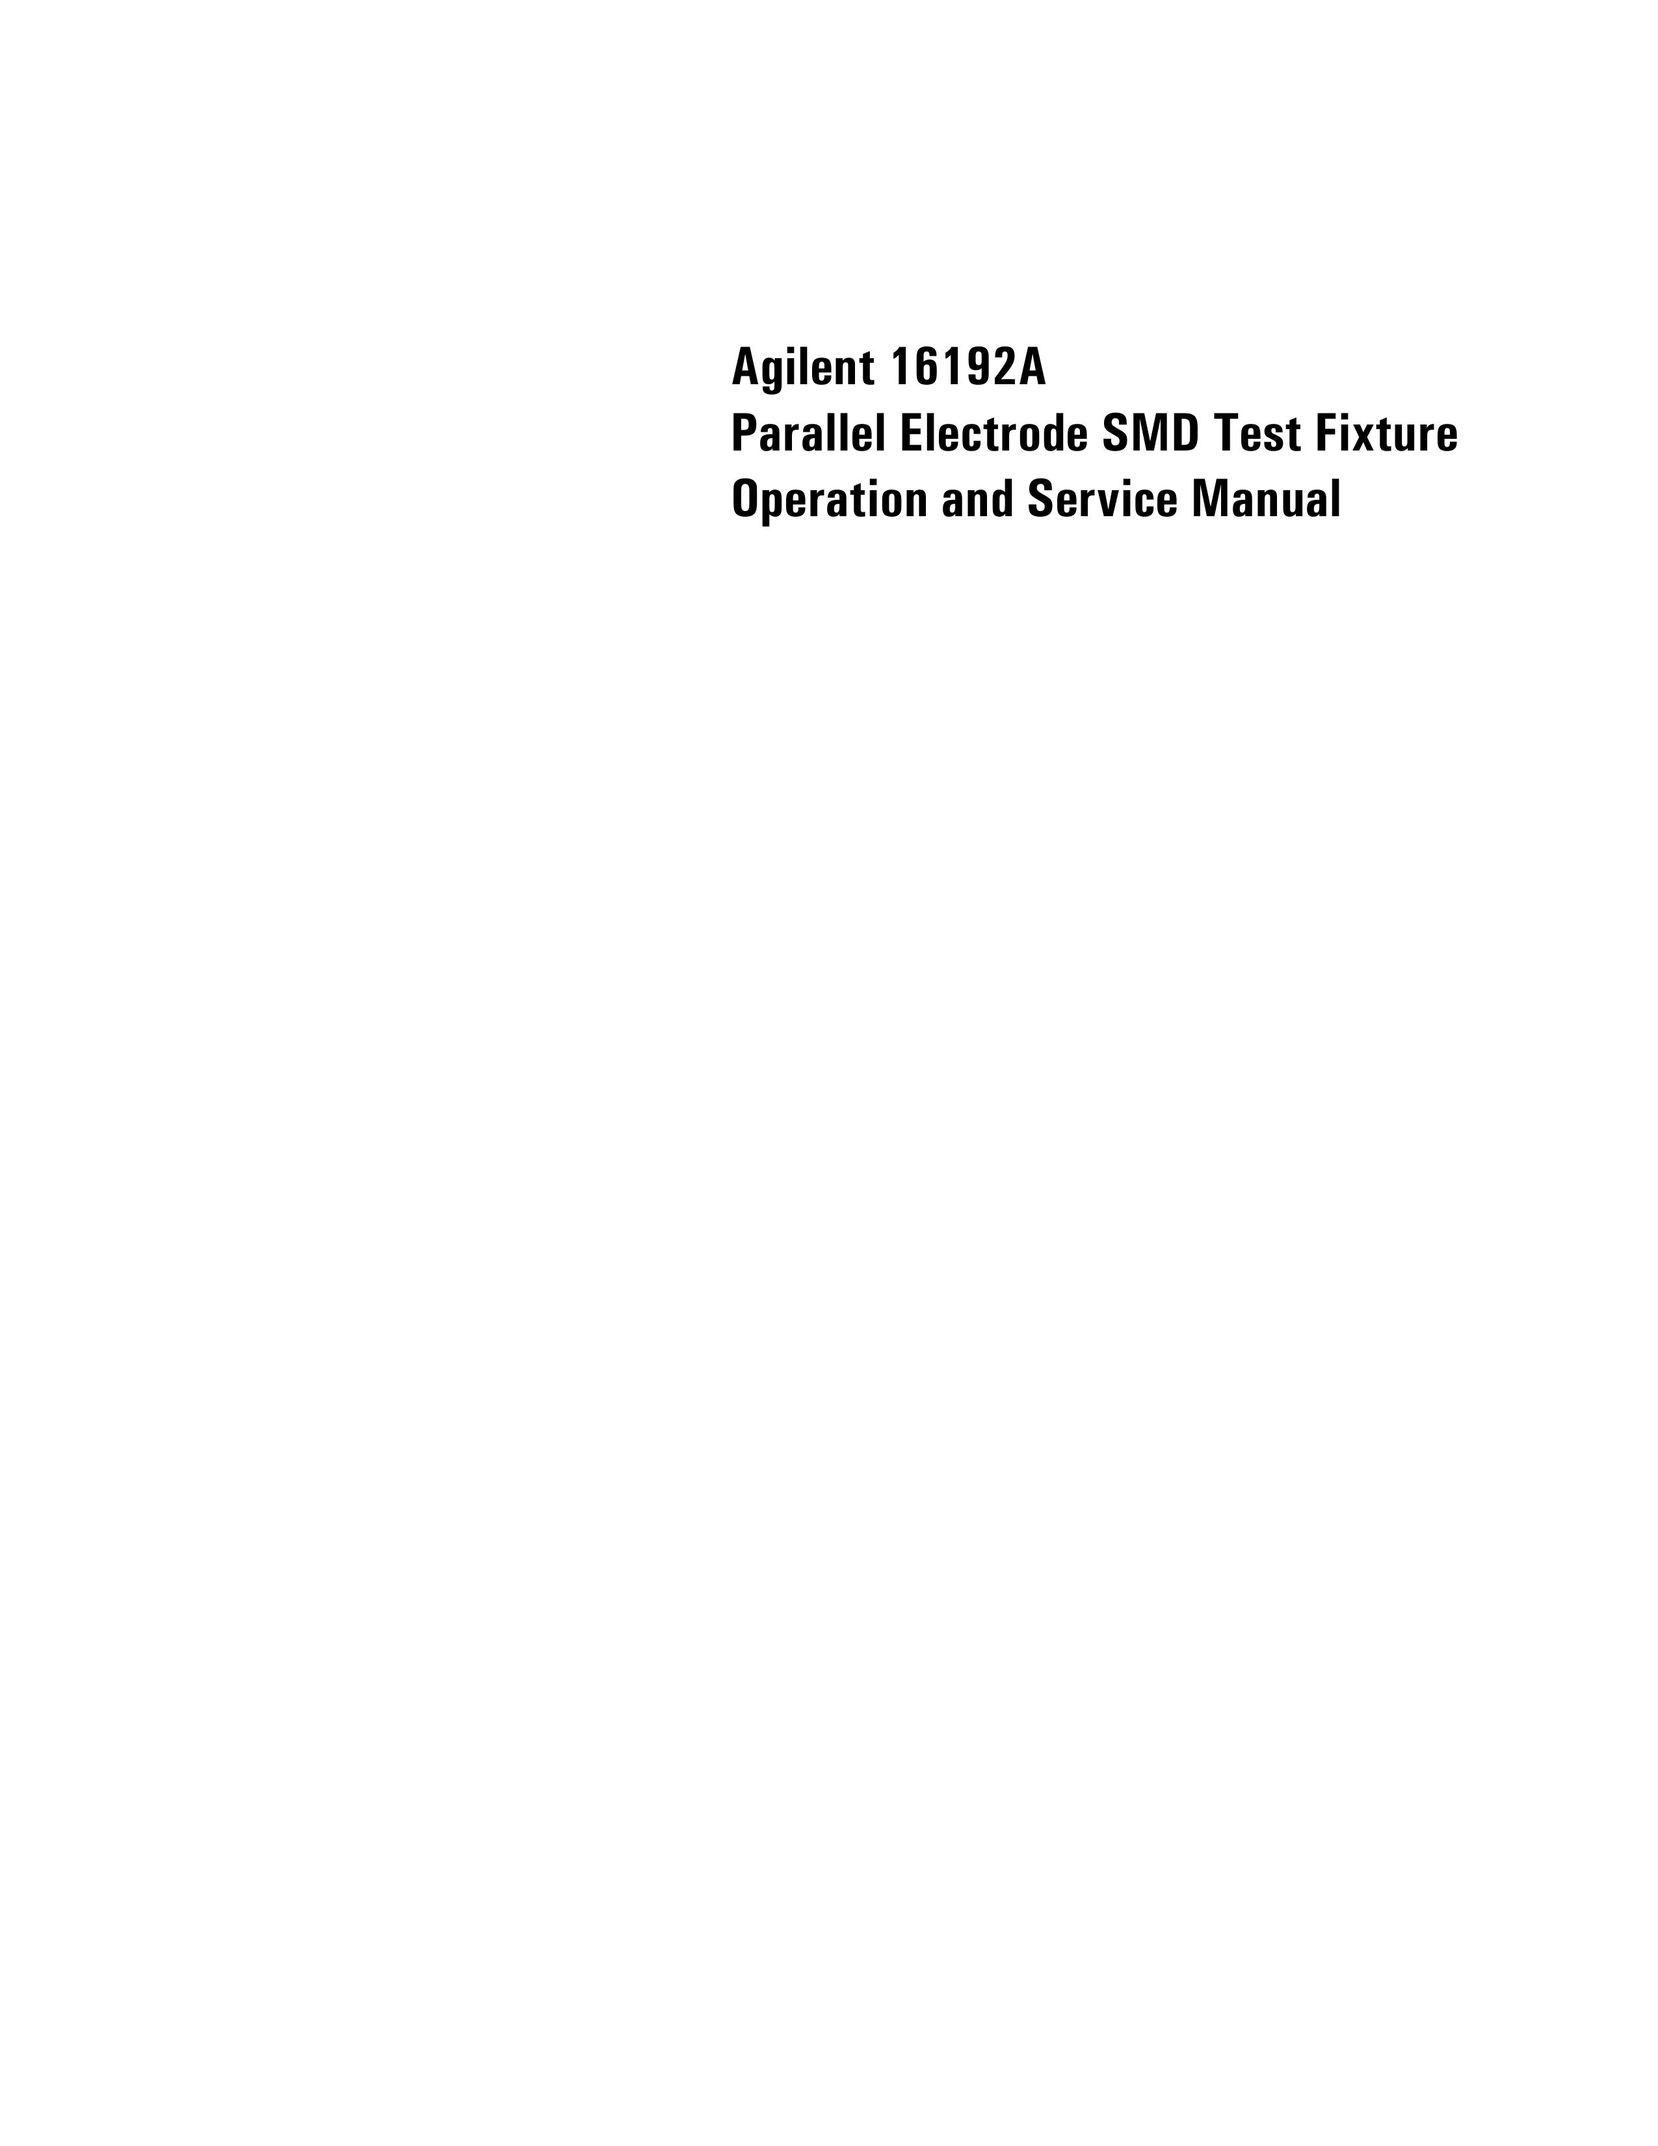 Agilent Technologies 16192a Satellite TV System User Manual